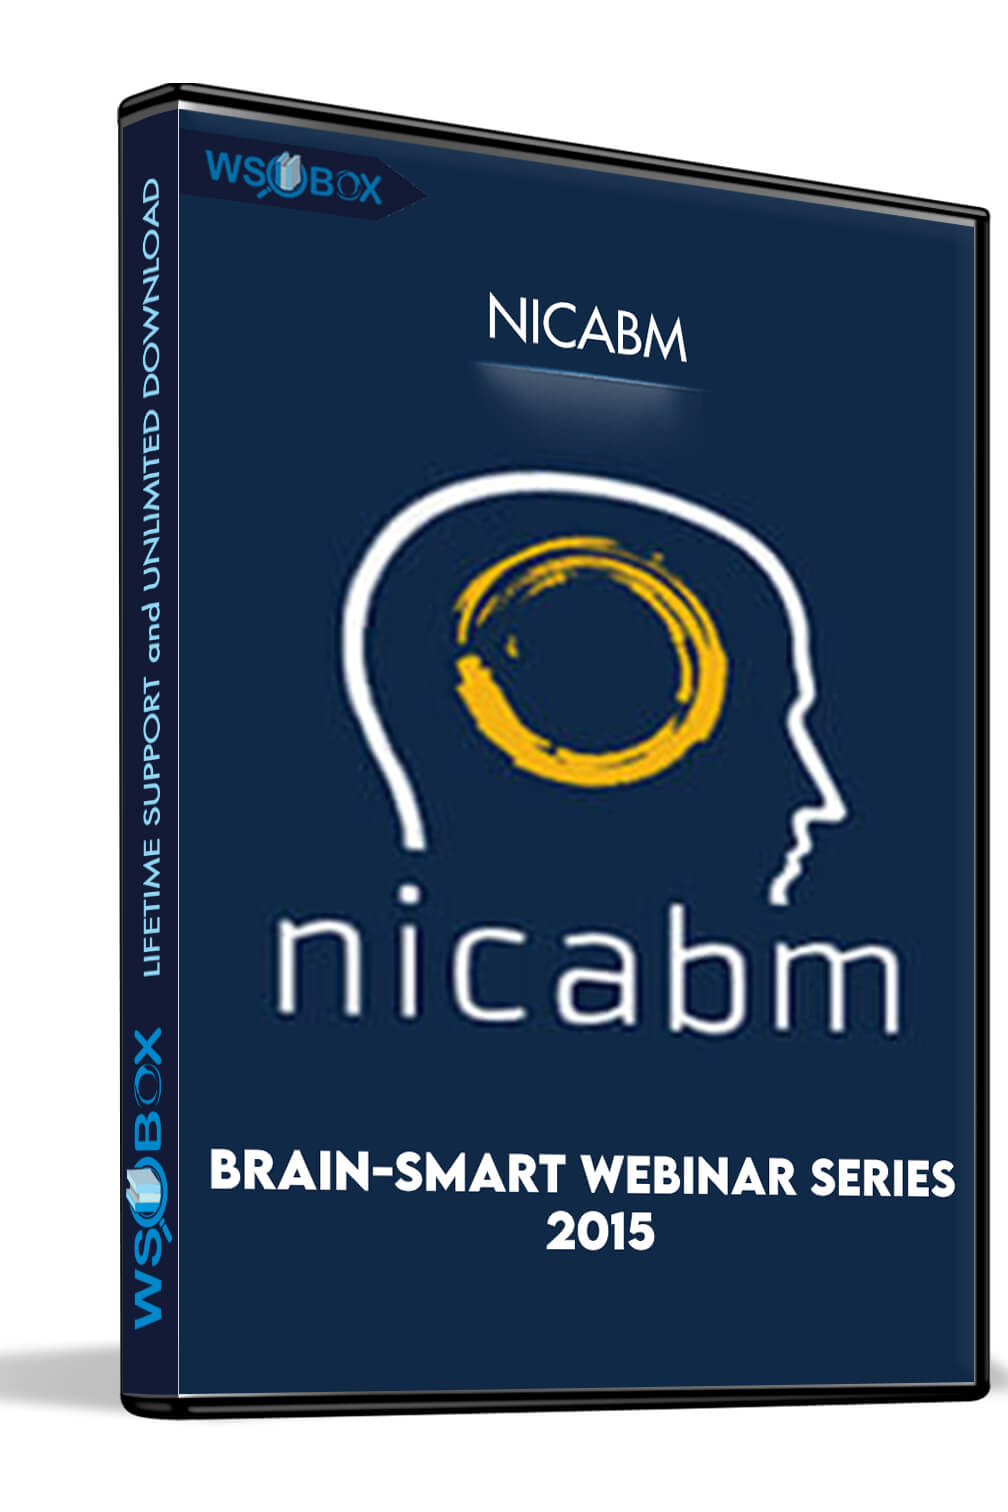 Brain-Smart Webinar Series 2015 – NICABM